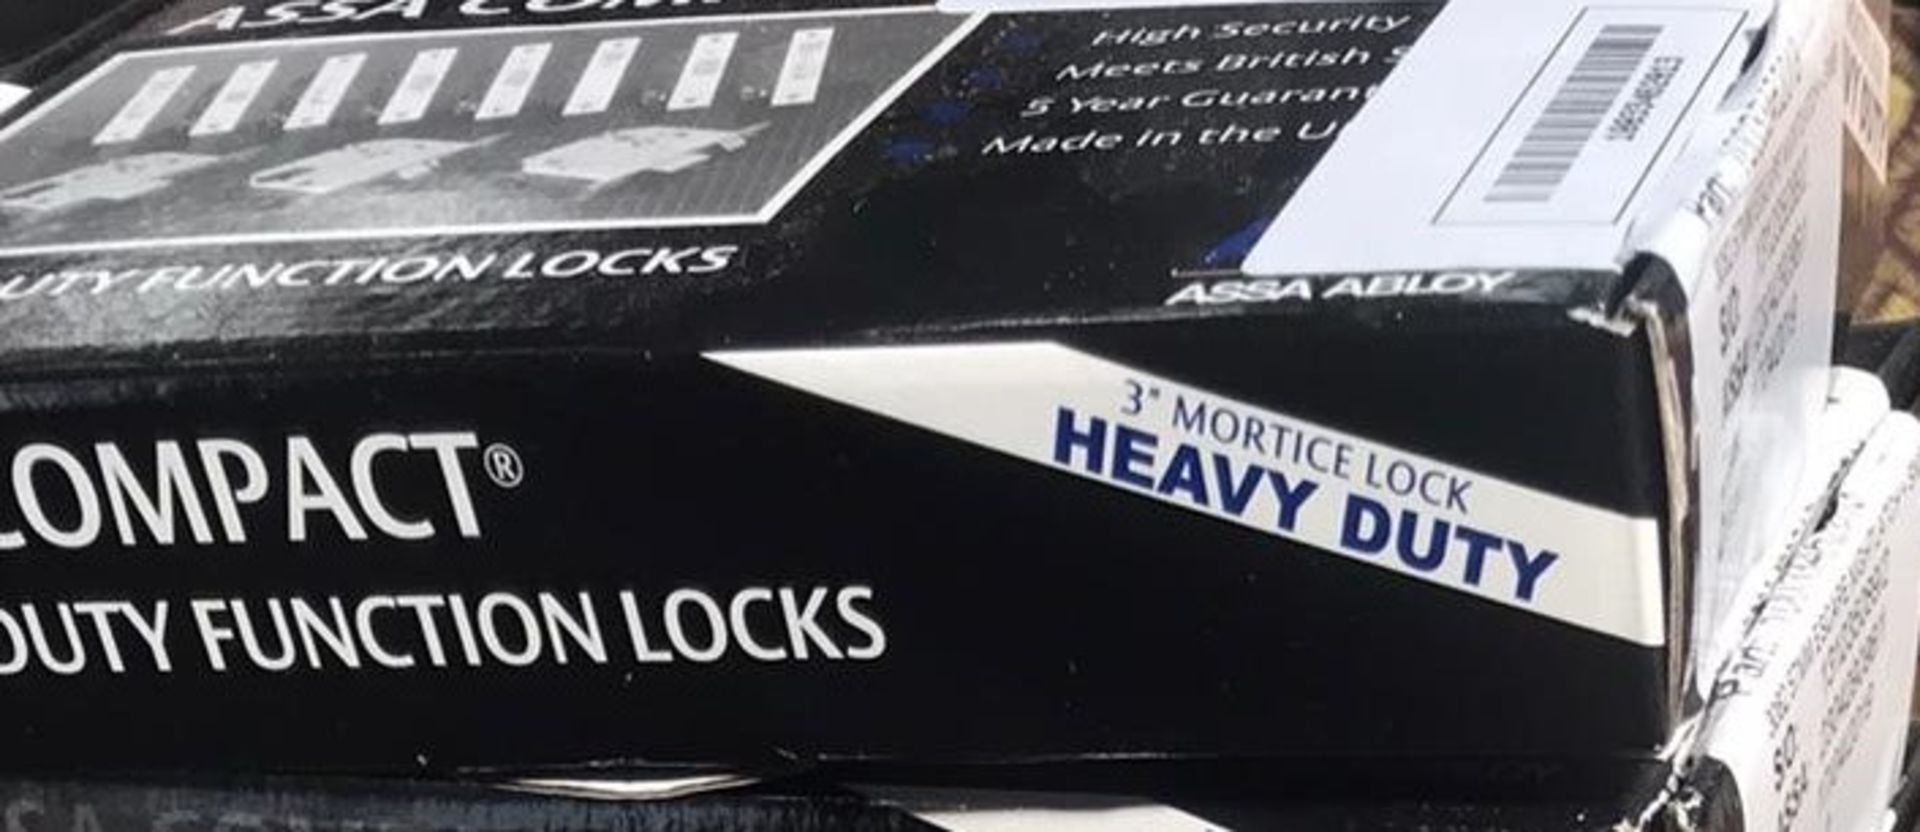 1 x Assa 57mm Escape Night Latch Door Lock + SNIB - Product Code 10033462013 - Brand New Stock - RRP - Image 2 of 2